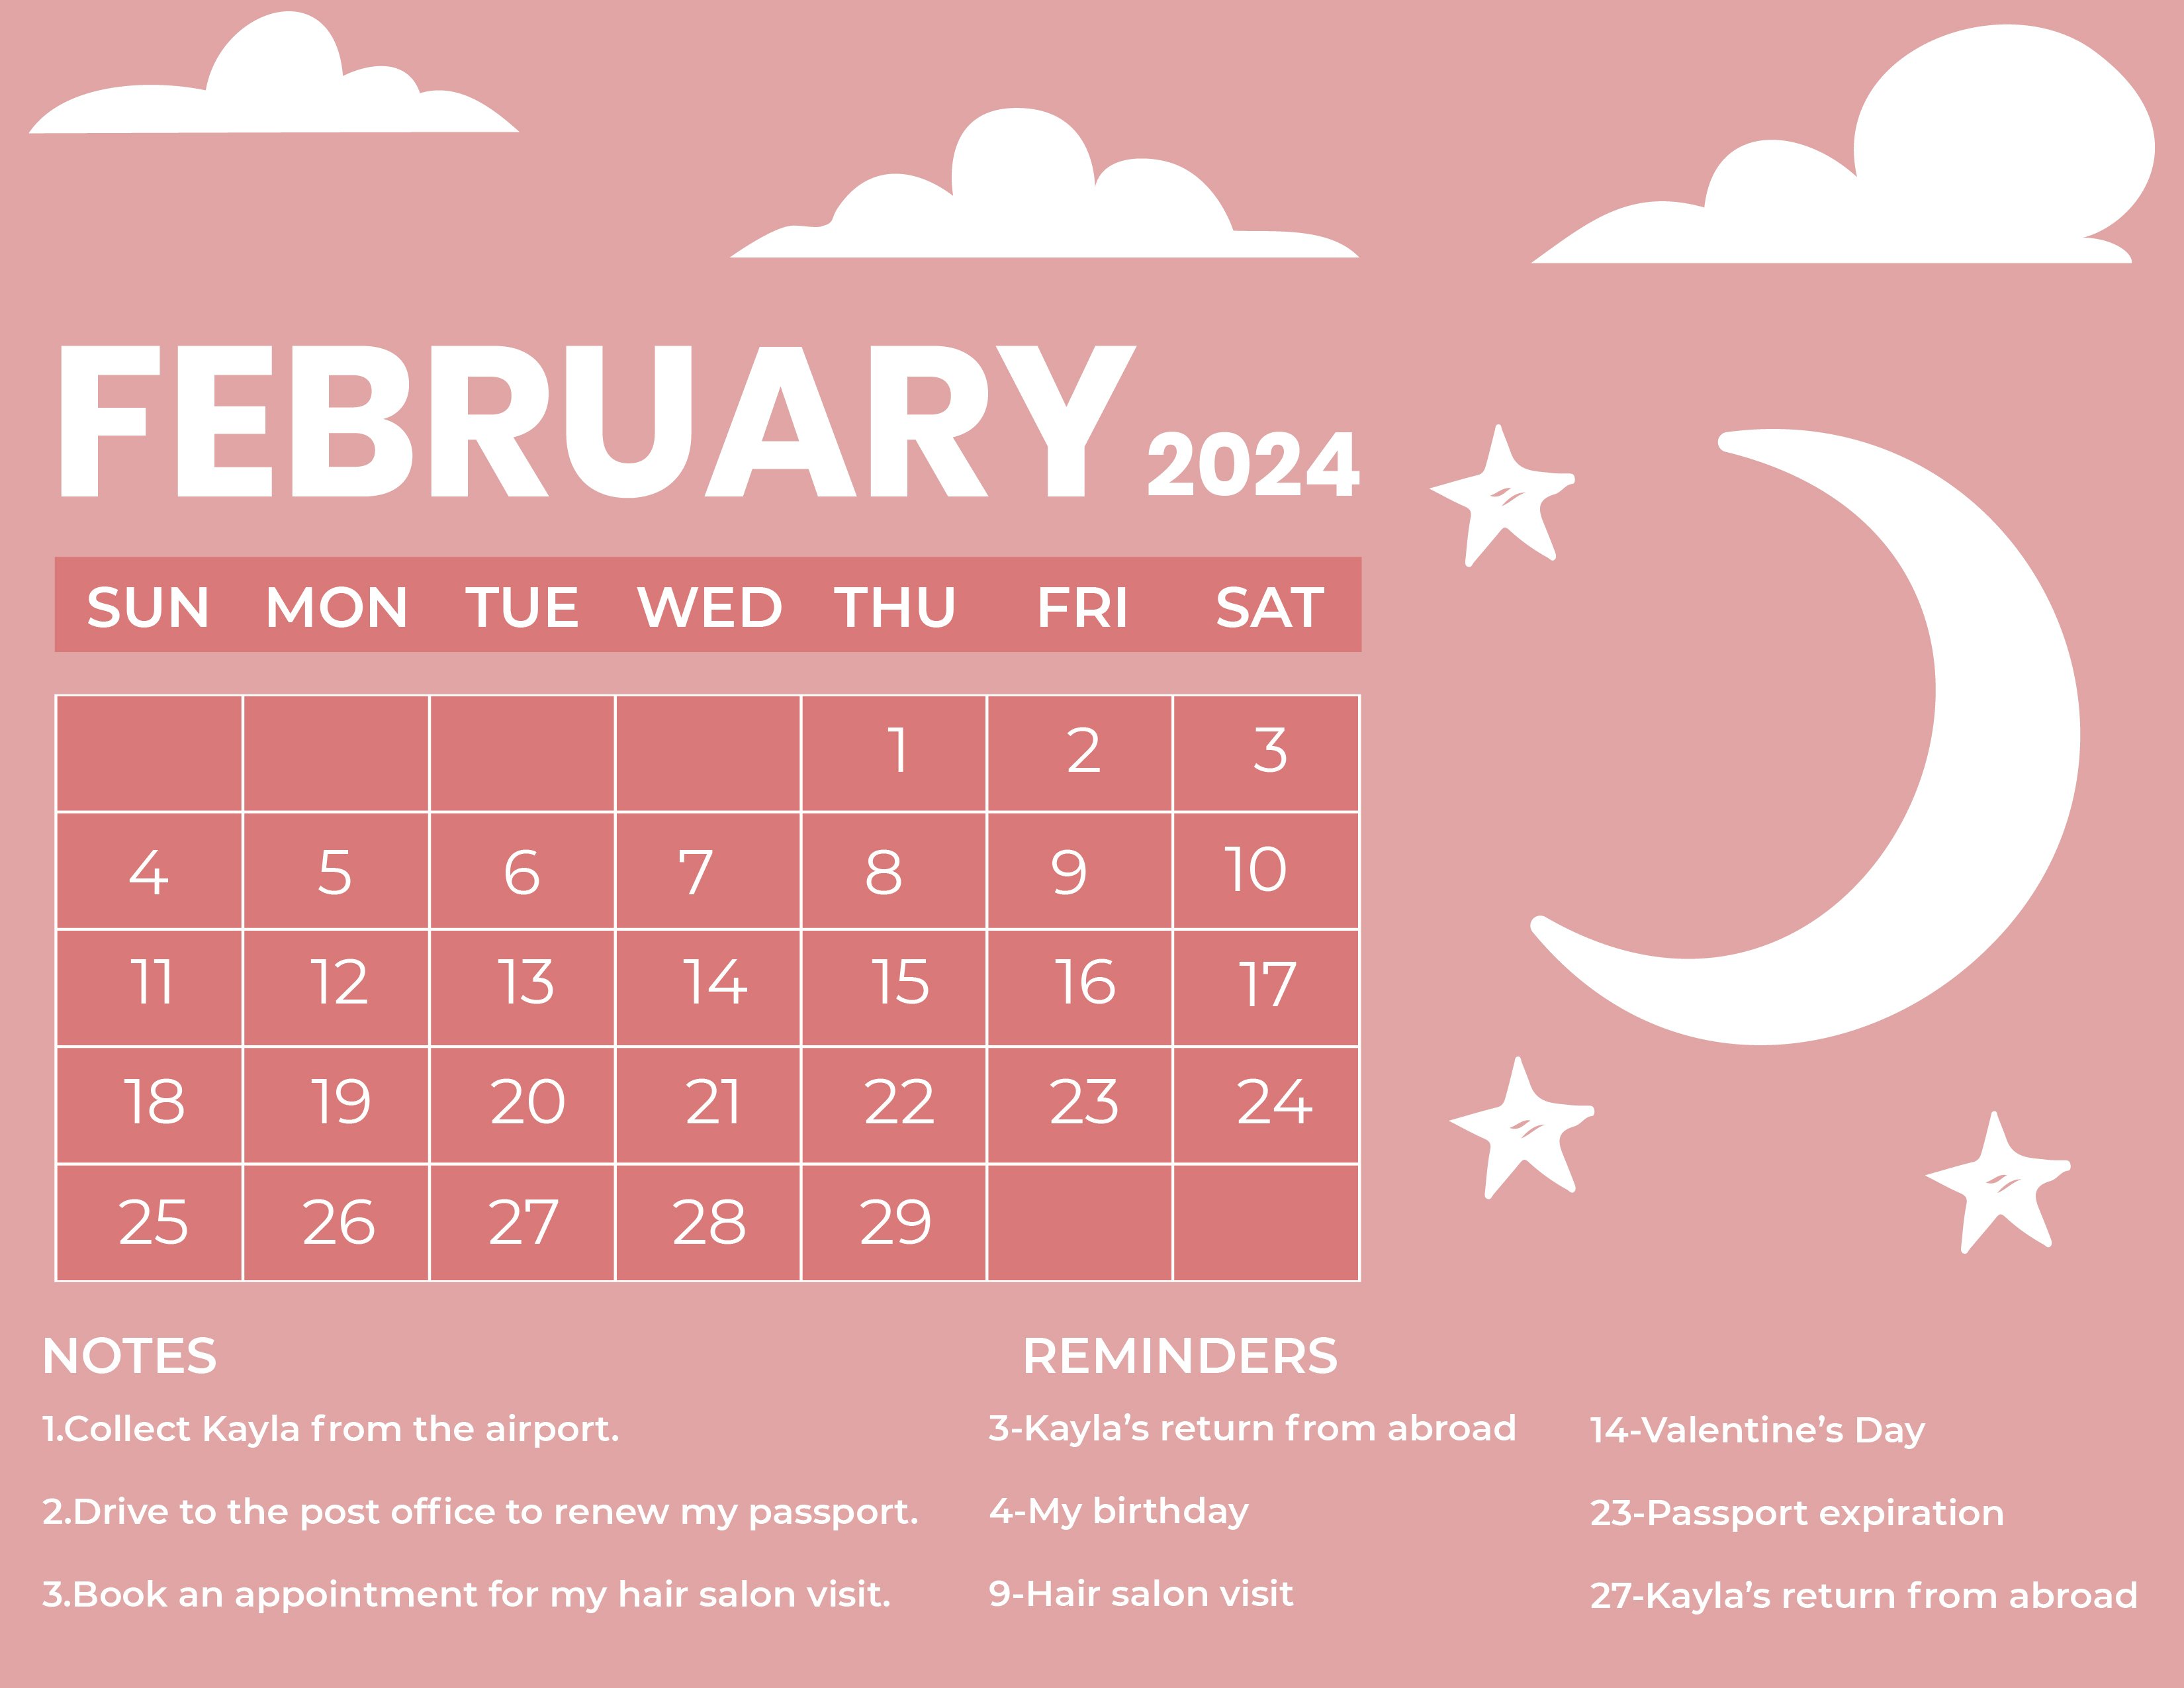 February 2024 Calendar Wallpapers Top Free February 2024 Calendar